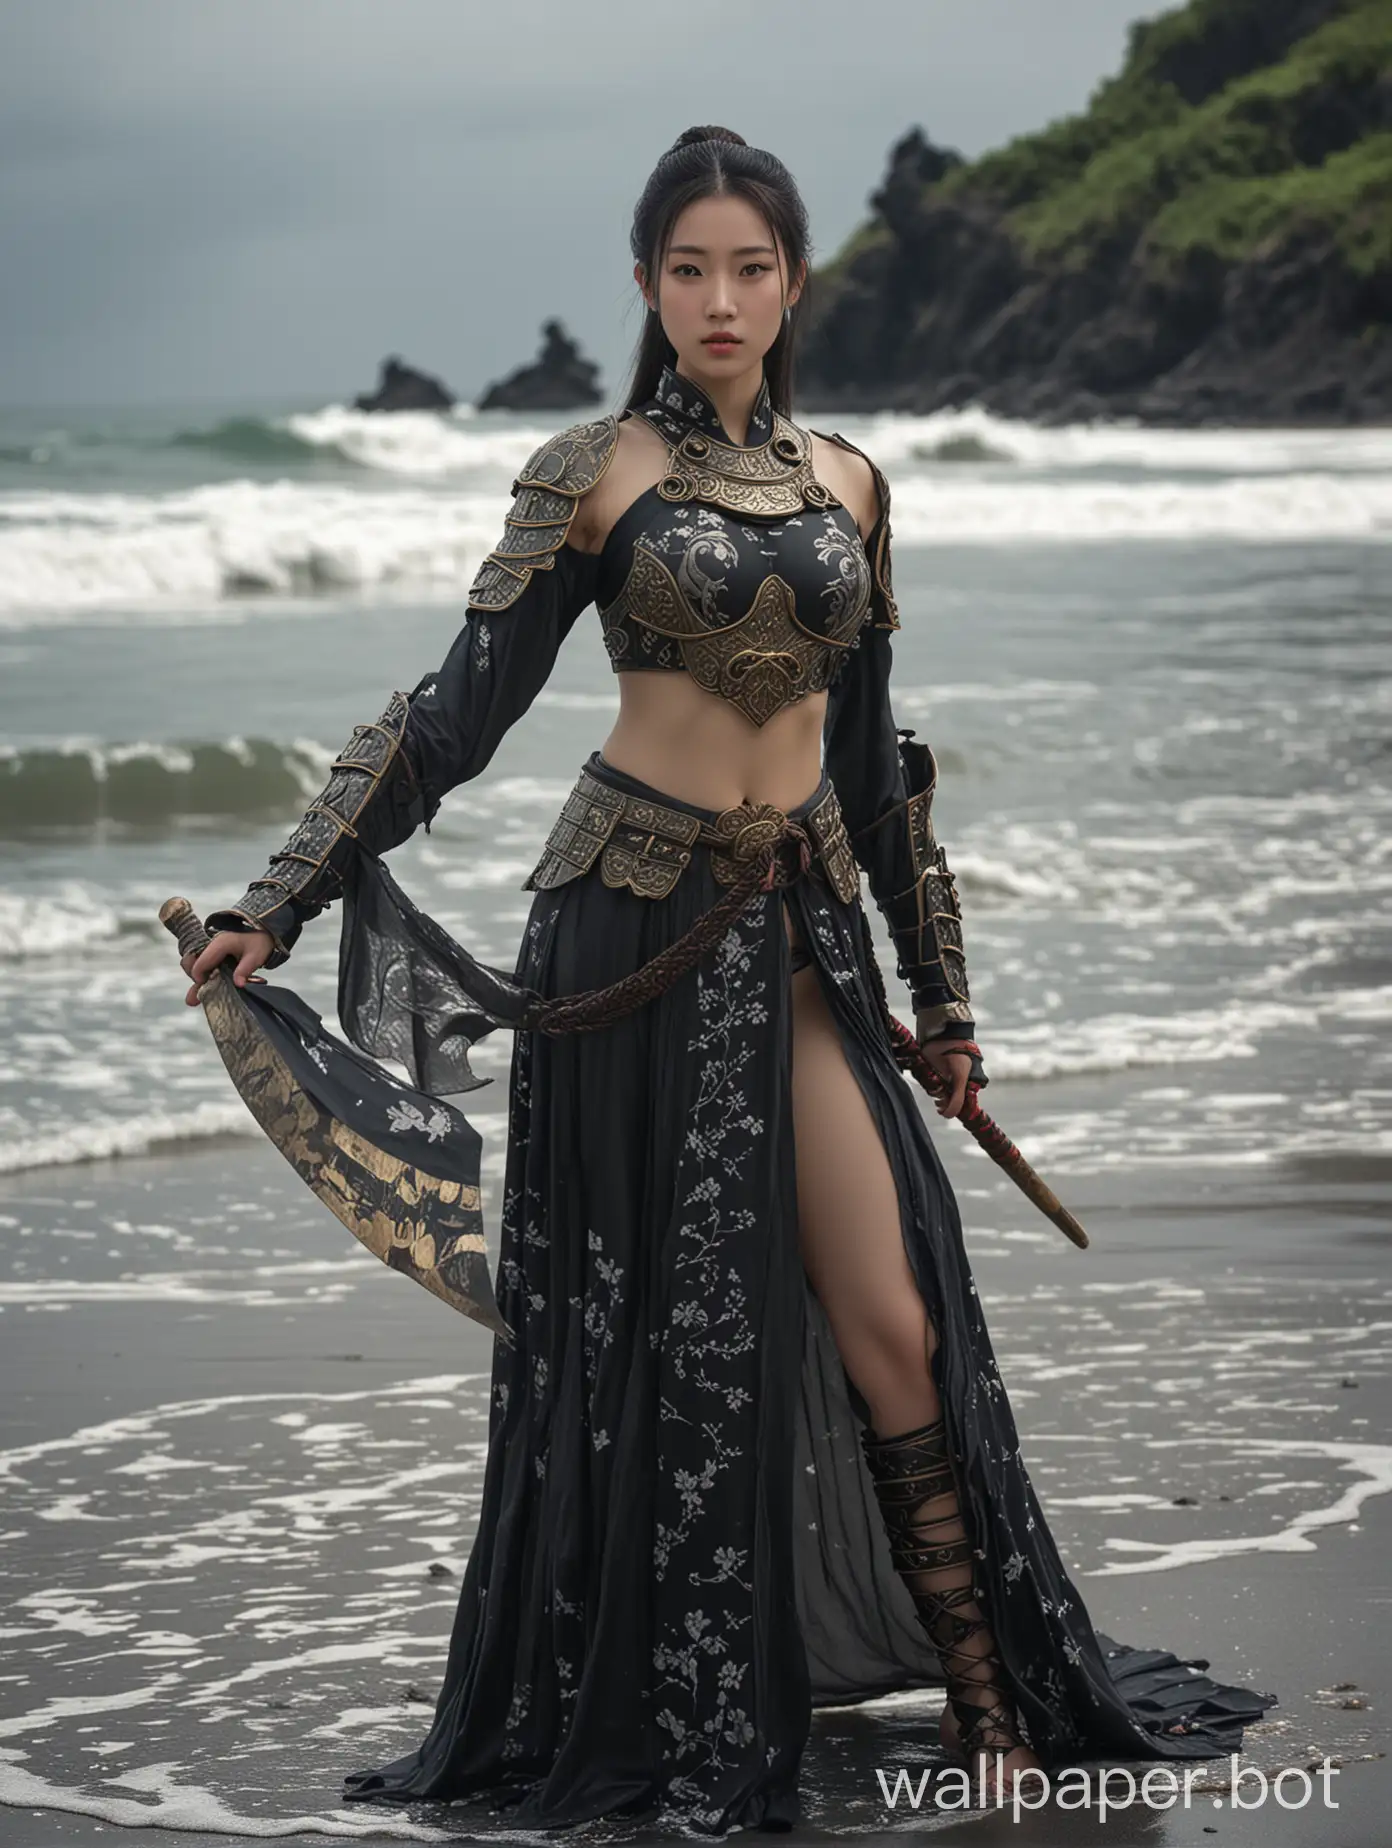 Heroic-Wuxia-Warrior-Princess-in-Elegant-Armor-at-Black-Sand-Beach